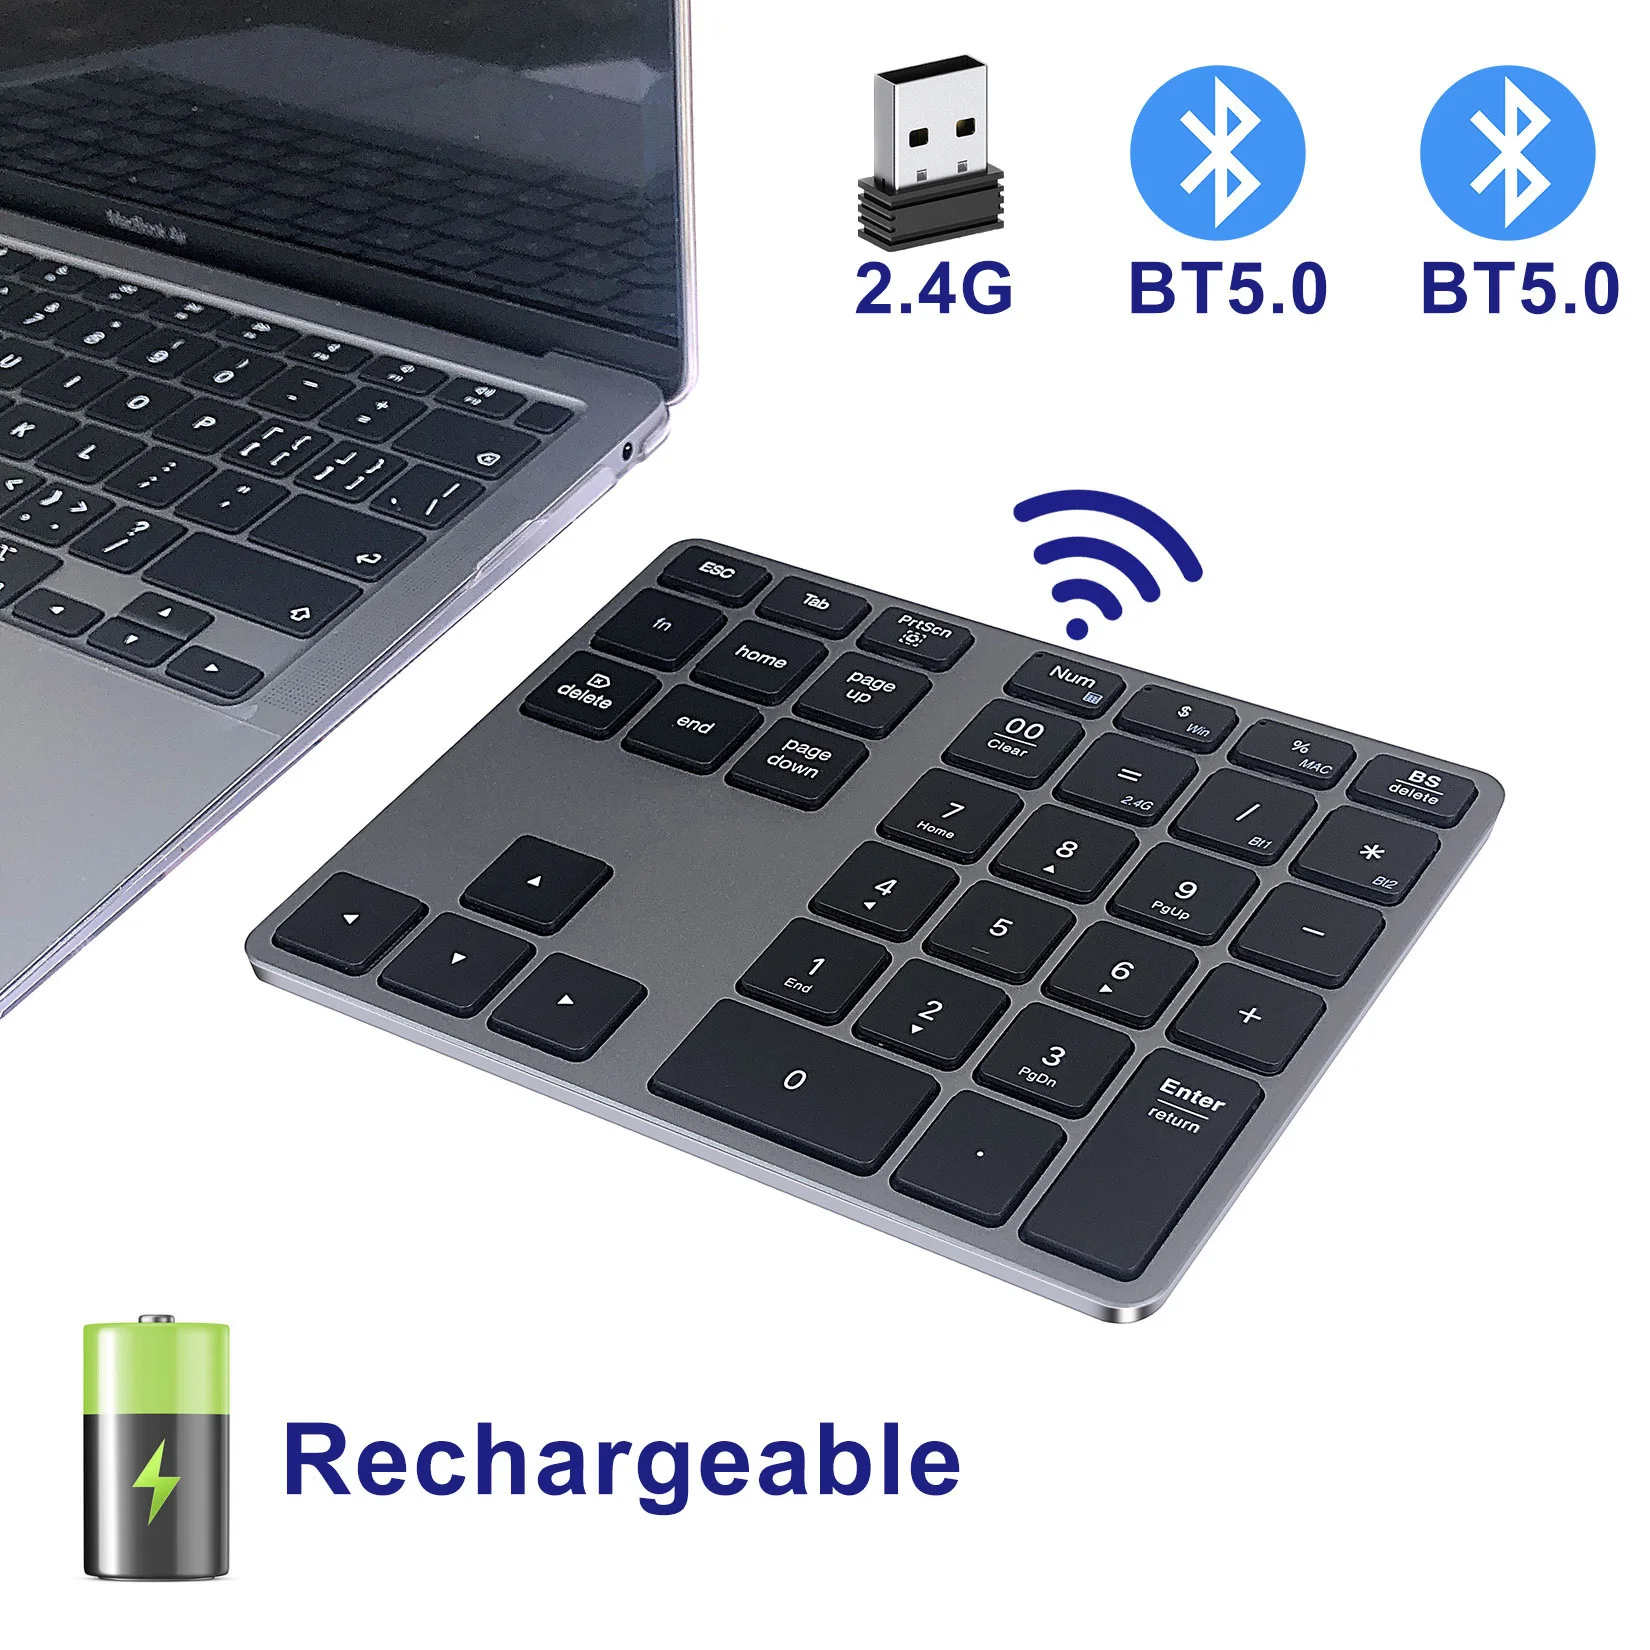 

Bluetooth Numeric Keypad Aluminum Rechargeable Wireless Number Pad Slim 35 Keys USB+BT5.0 Numpad Keyboard for Mac,Macbook,Laptop